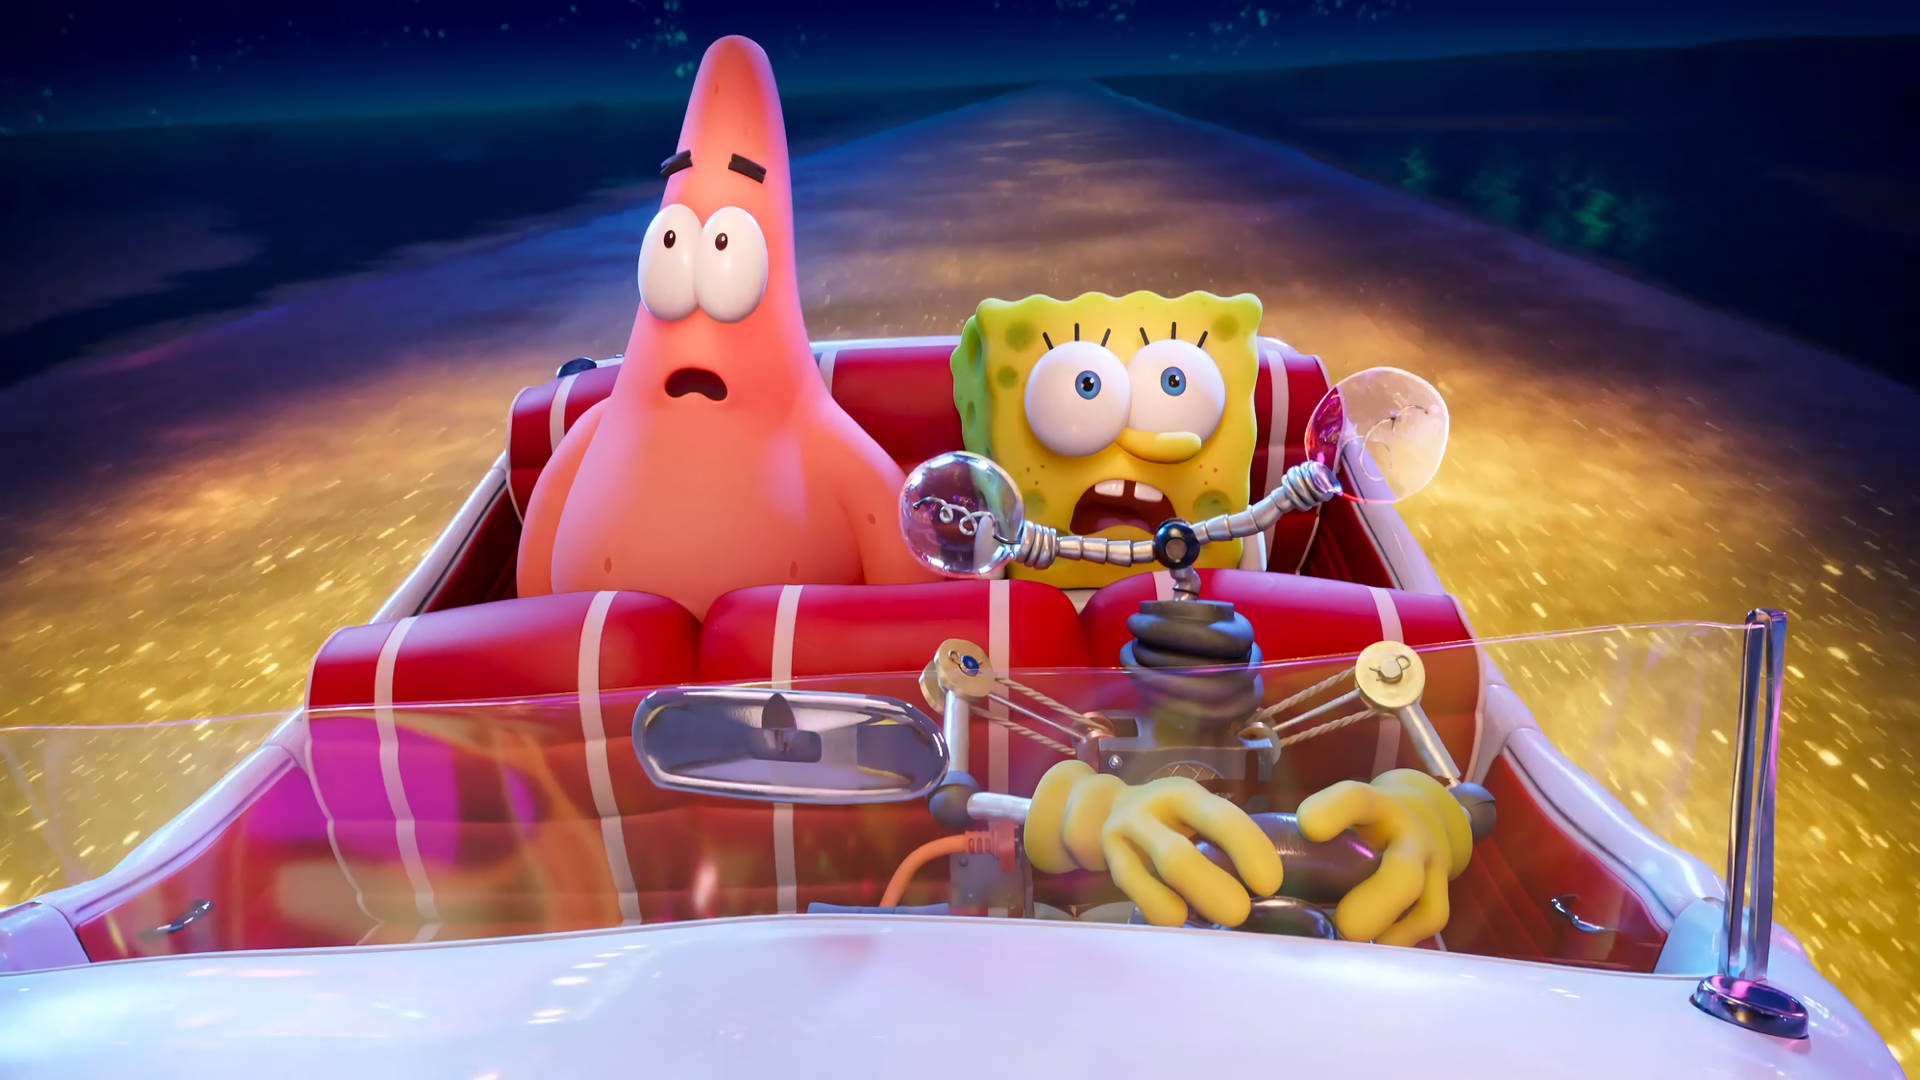 Spongebob And Patrick In A Car